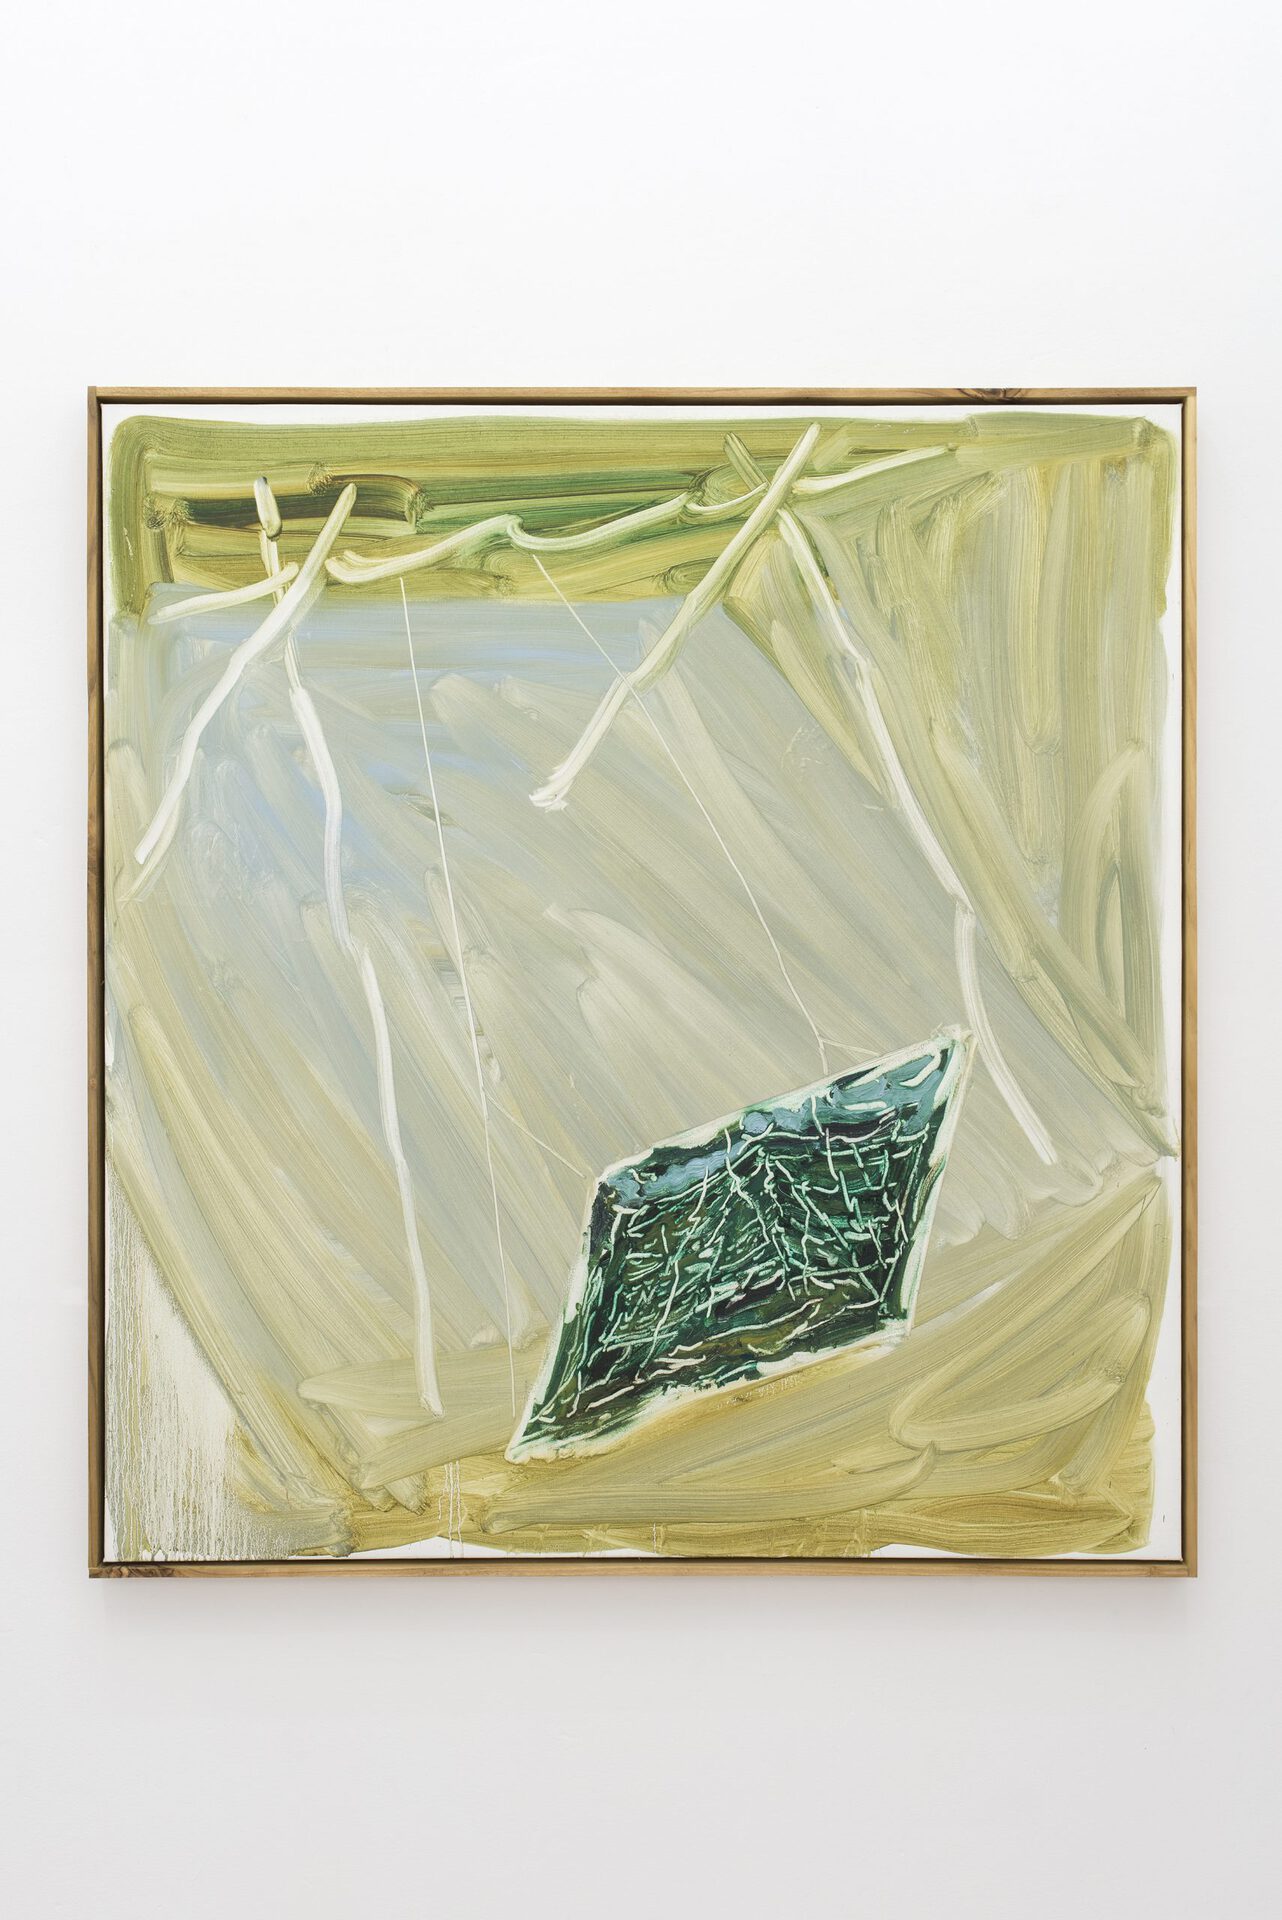 Jonas Dehnen, ’Swing I’ oil and beeswax on canvas, black locust artist’s frame, 120 x 130 cm, 2020 (2)